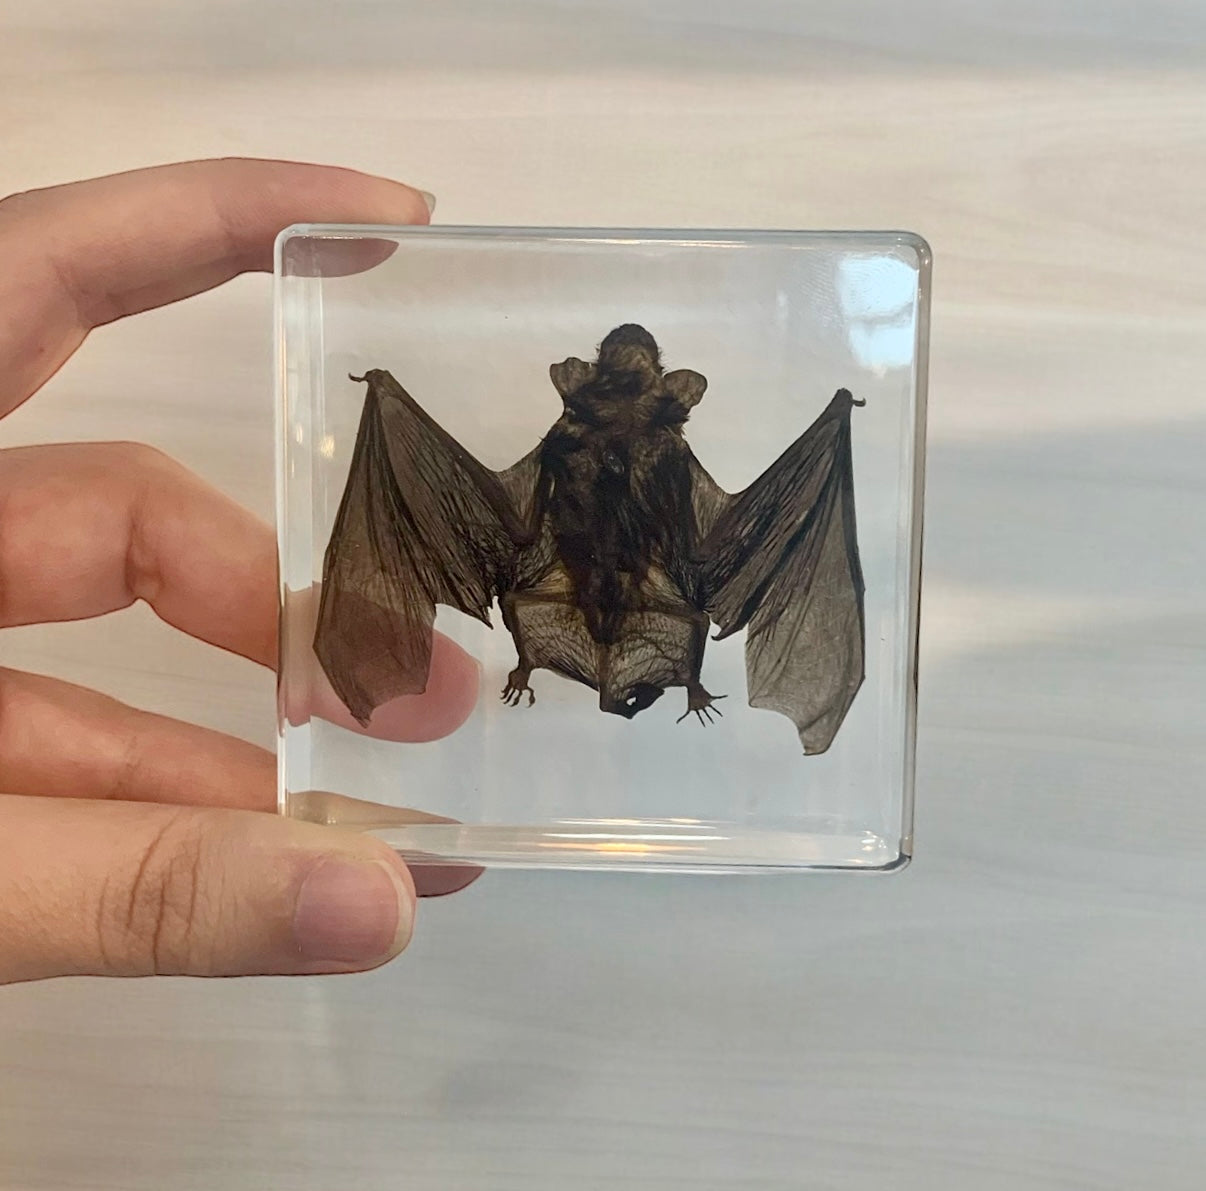 Bat Resin Paperweight